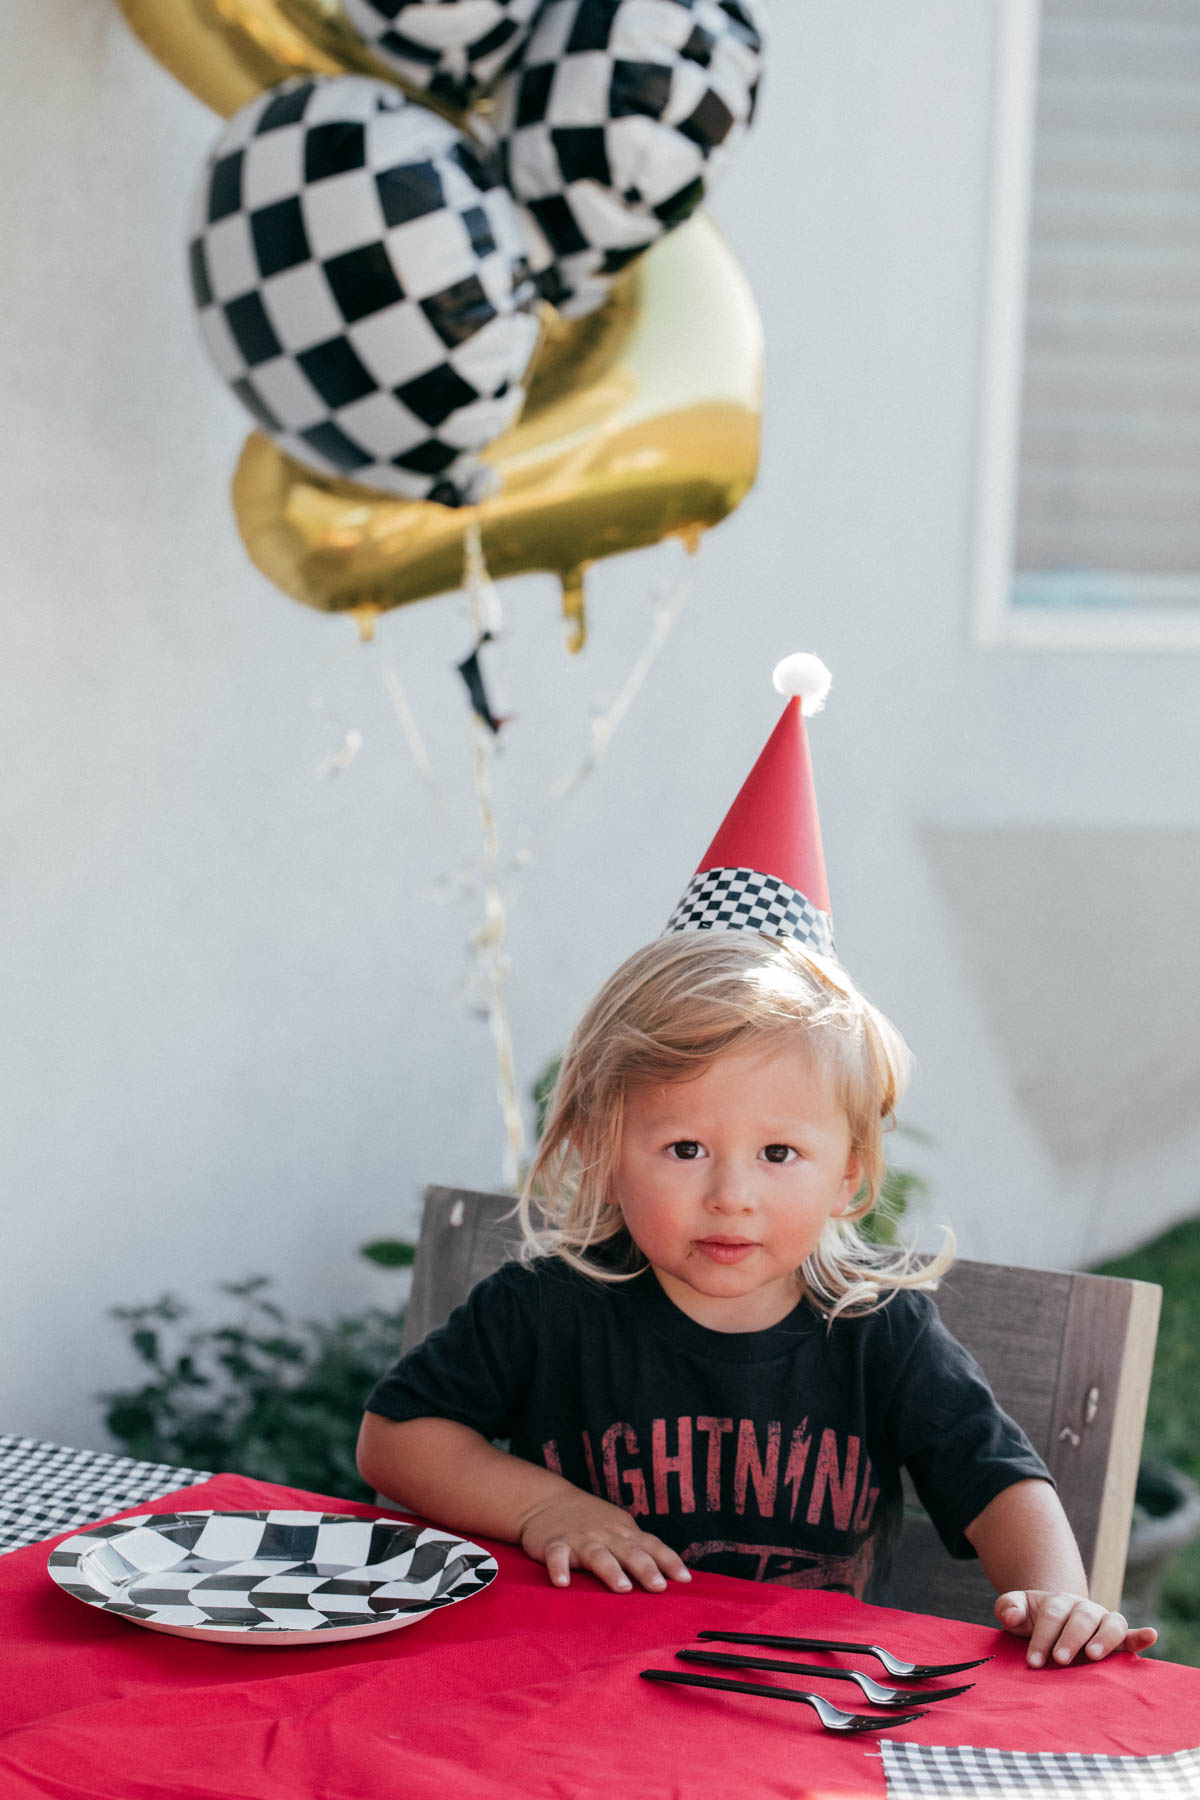 Birthday boy with custom race car party hat and race car theme party decorations at Disney Pixar Cars themed birthday